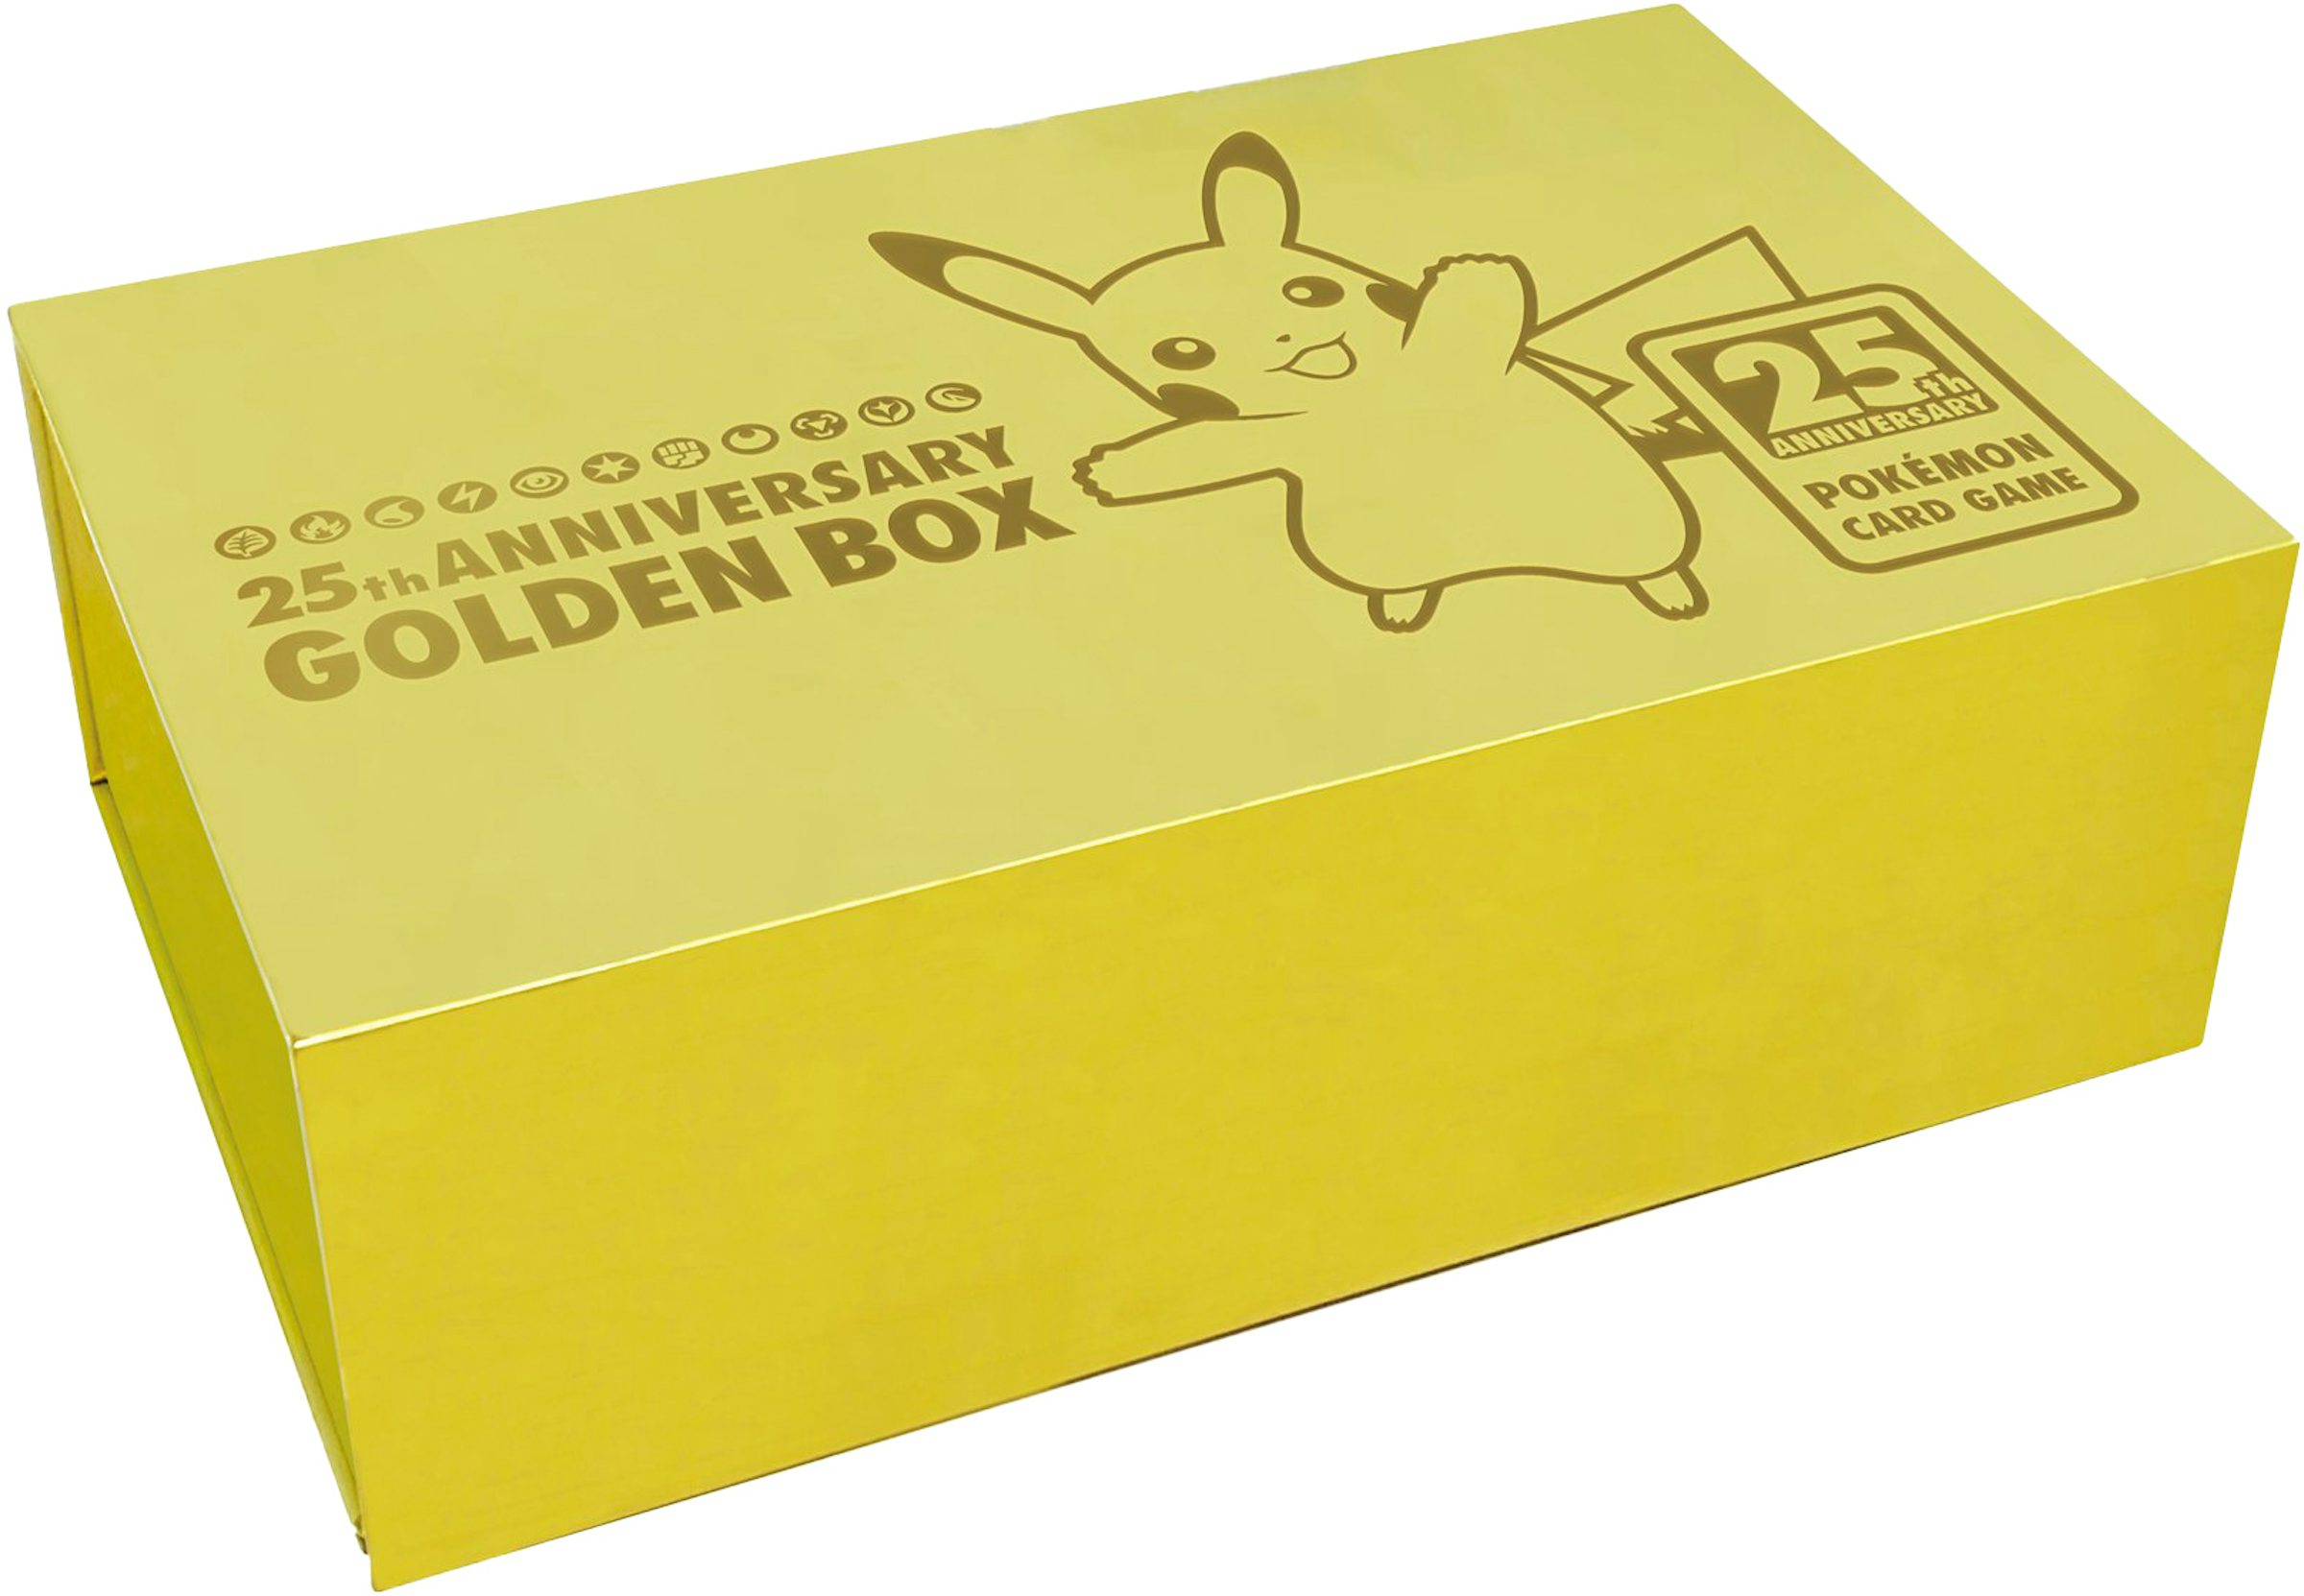 Pokemon Brand New - Factory Sealed in Box - White 2 Version